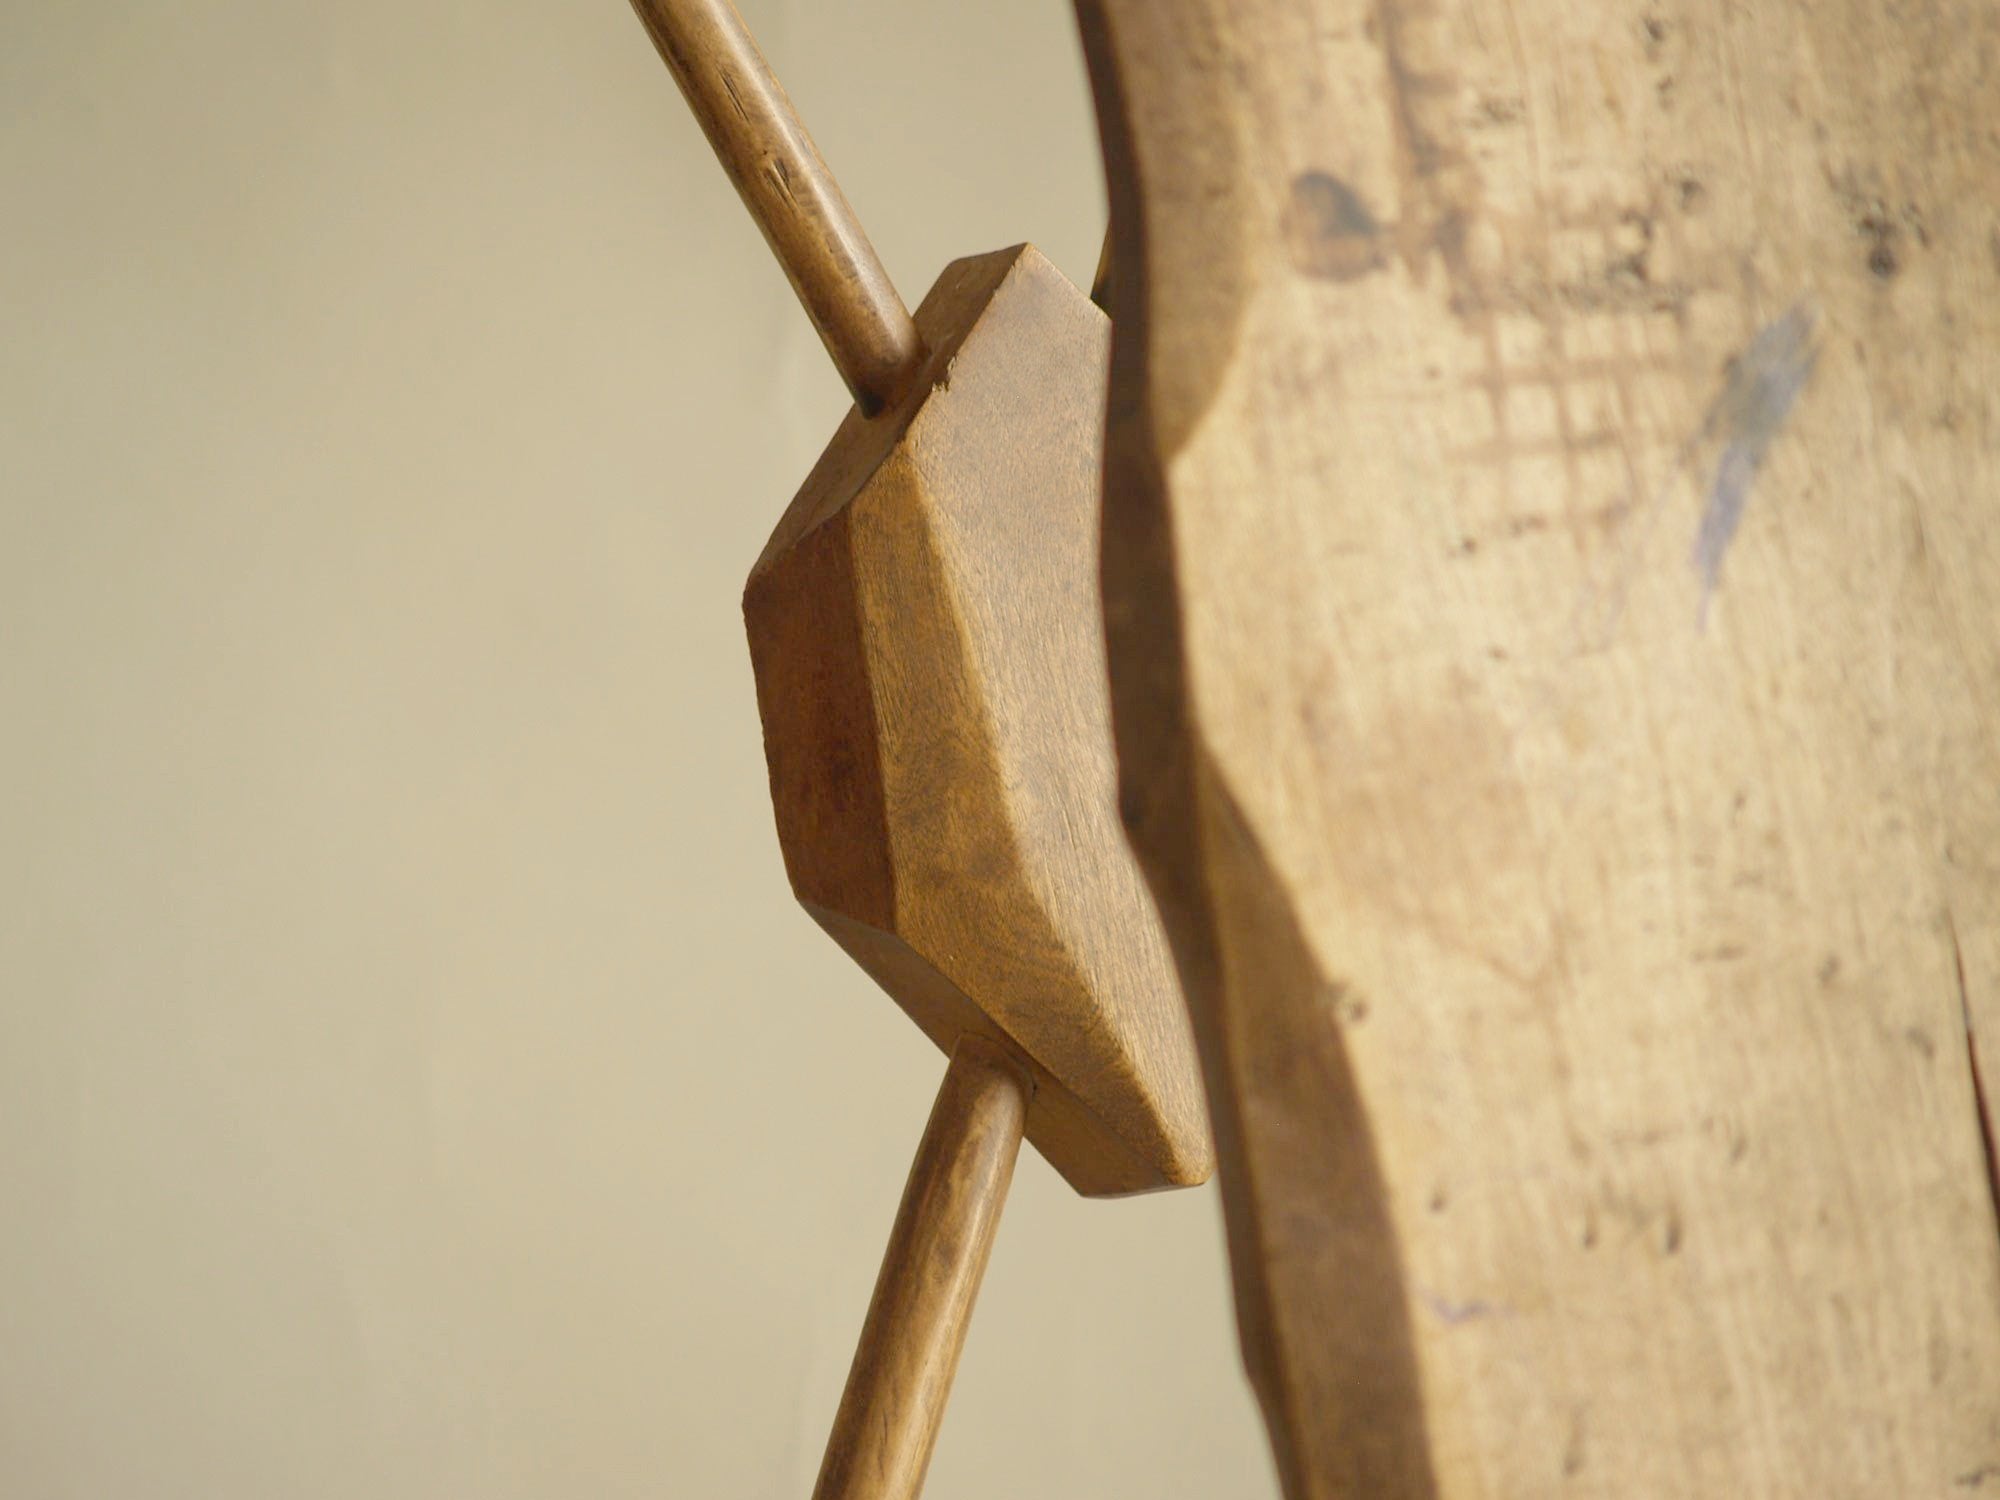 Table d'appoint ou banc wabi sabi en bois sculpté, Europe du Nord (vers 1950)..shepherd’s wabi sabi natural wood bench or table, Northern Europe (circa 1950)